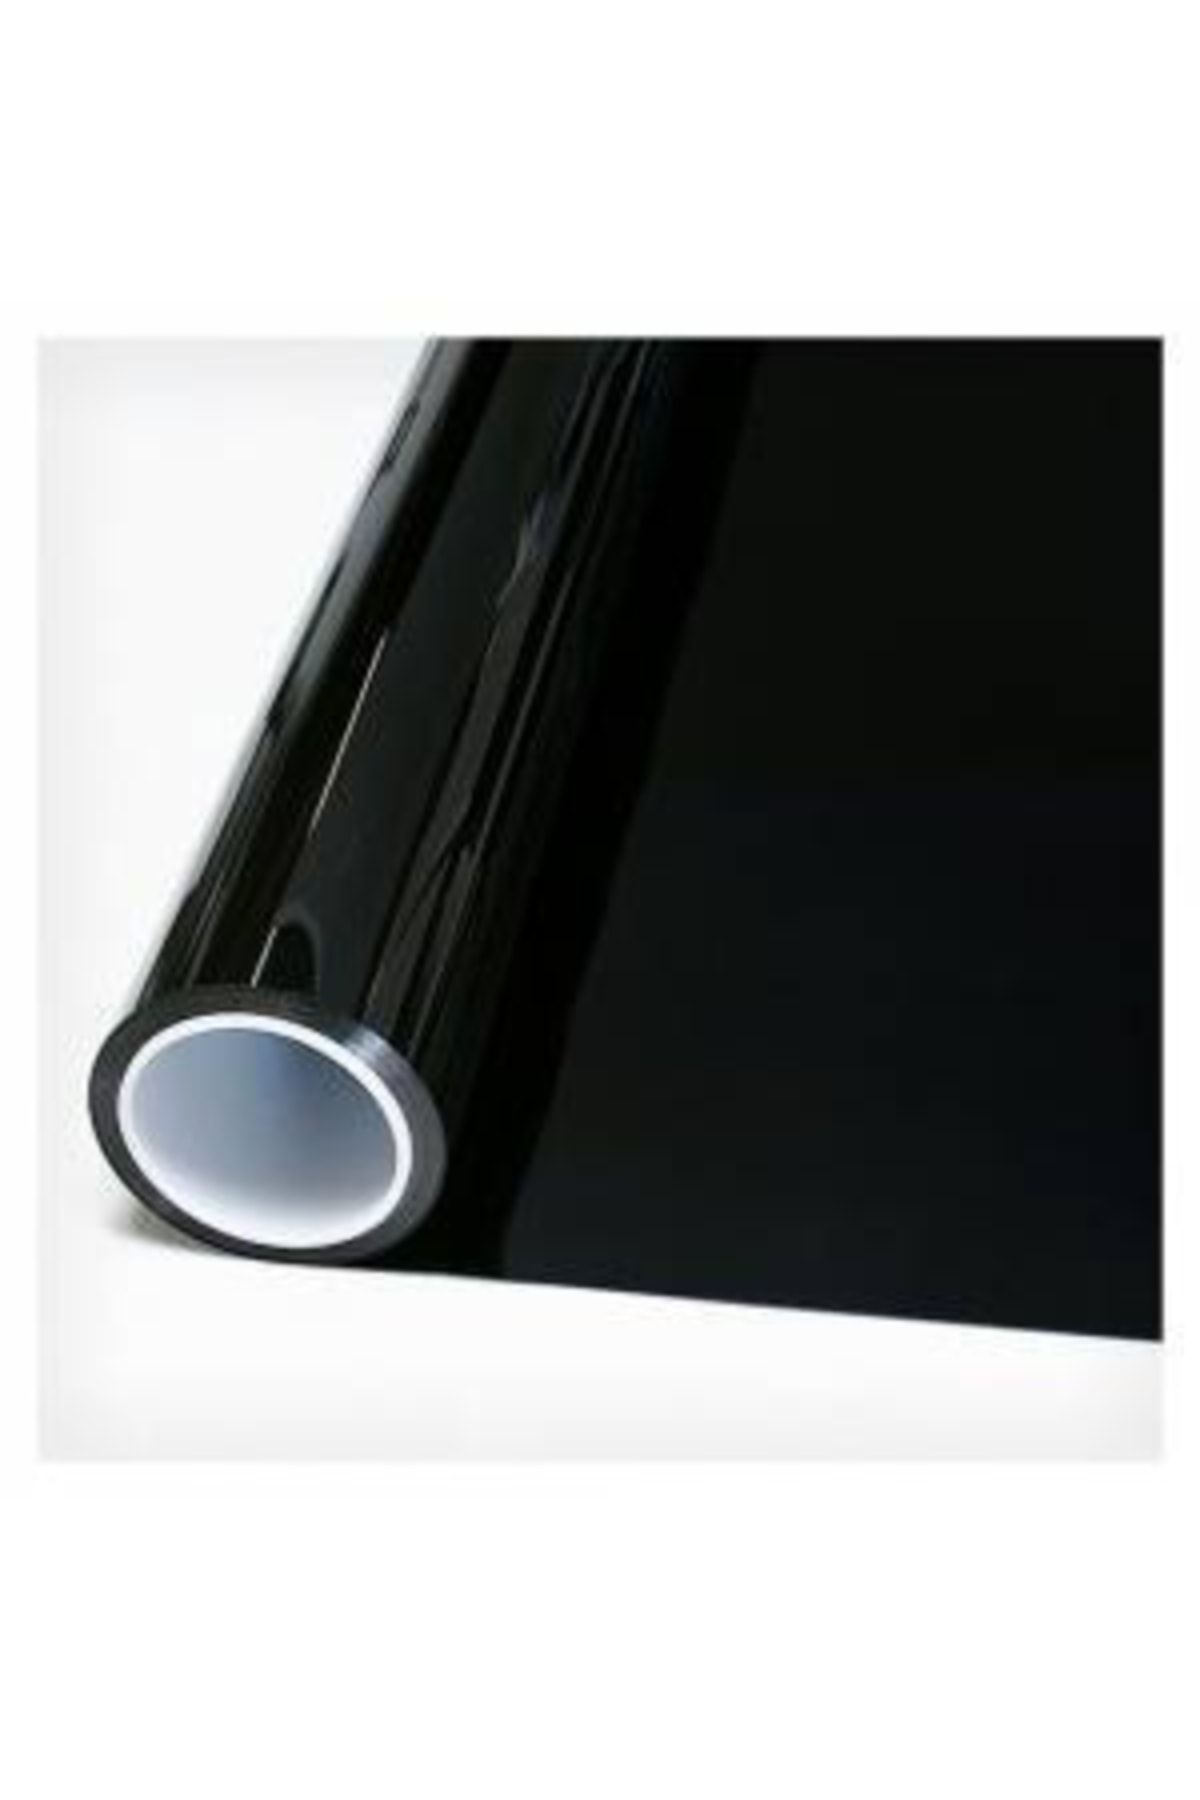 DARK PLUS % 05 Siyah Koyu Ton Cam Filmi (75cm X 6m) Fiyatı, Yorumları -  Trendyol